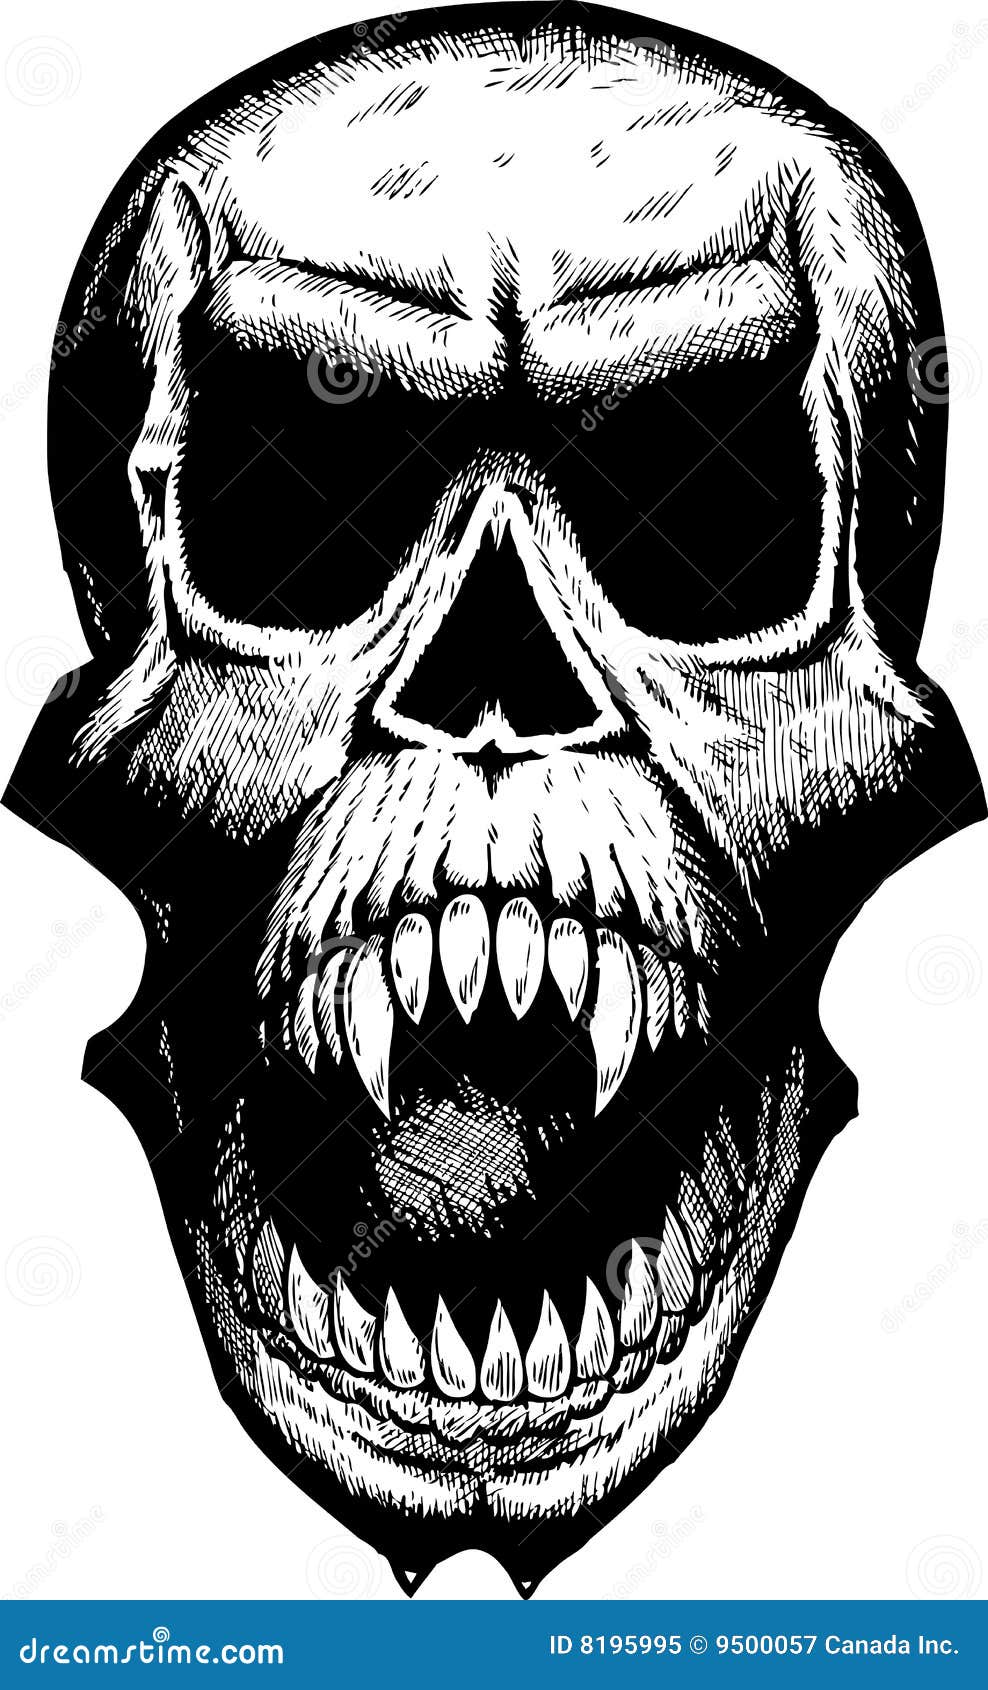 Scary yelling skull stock vector. Image of bite, head - 8195995